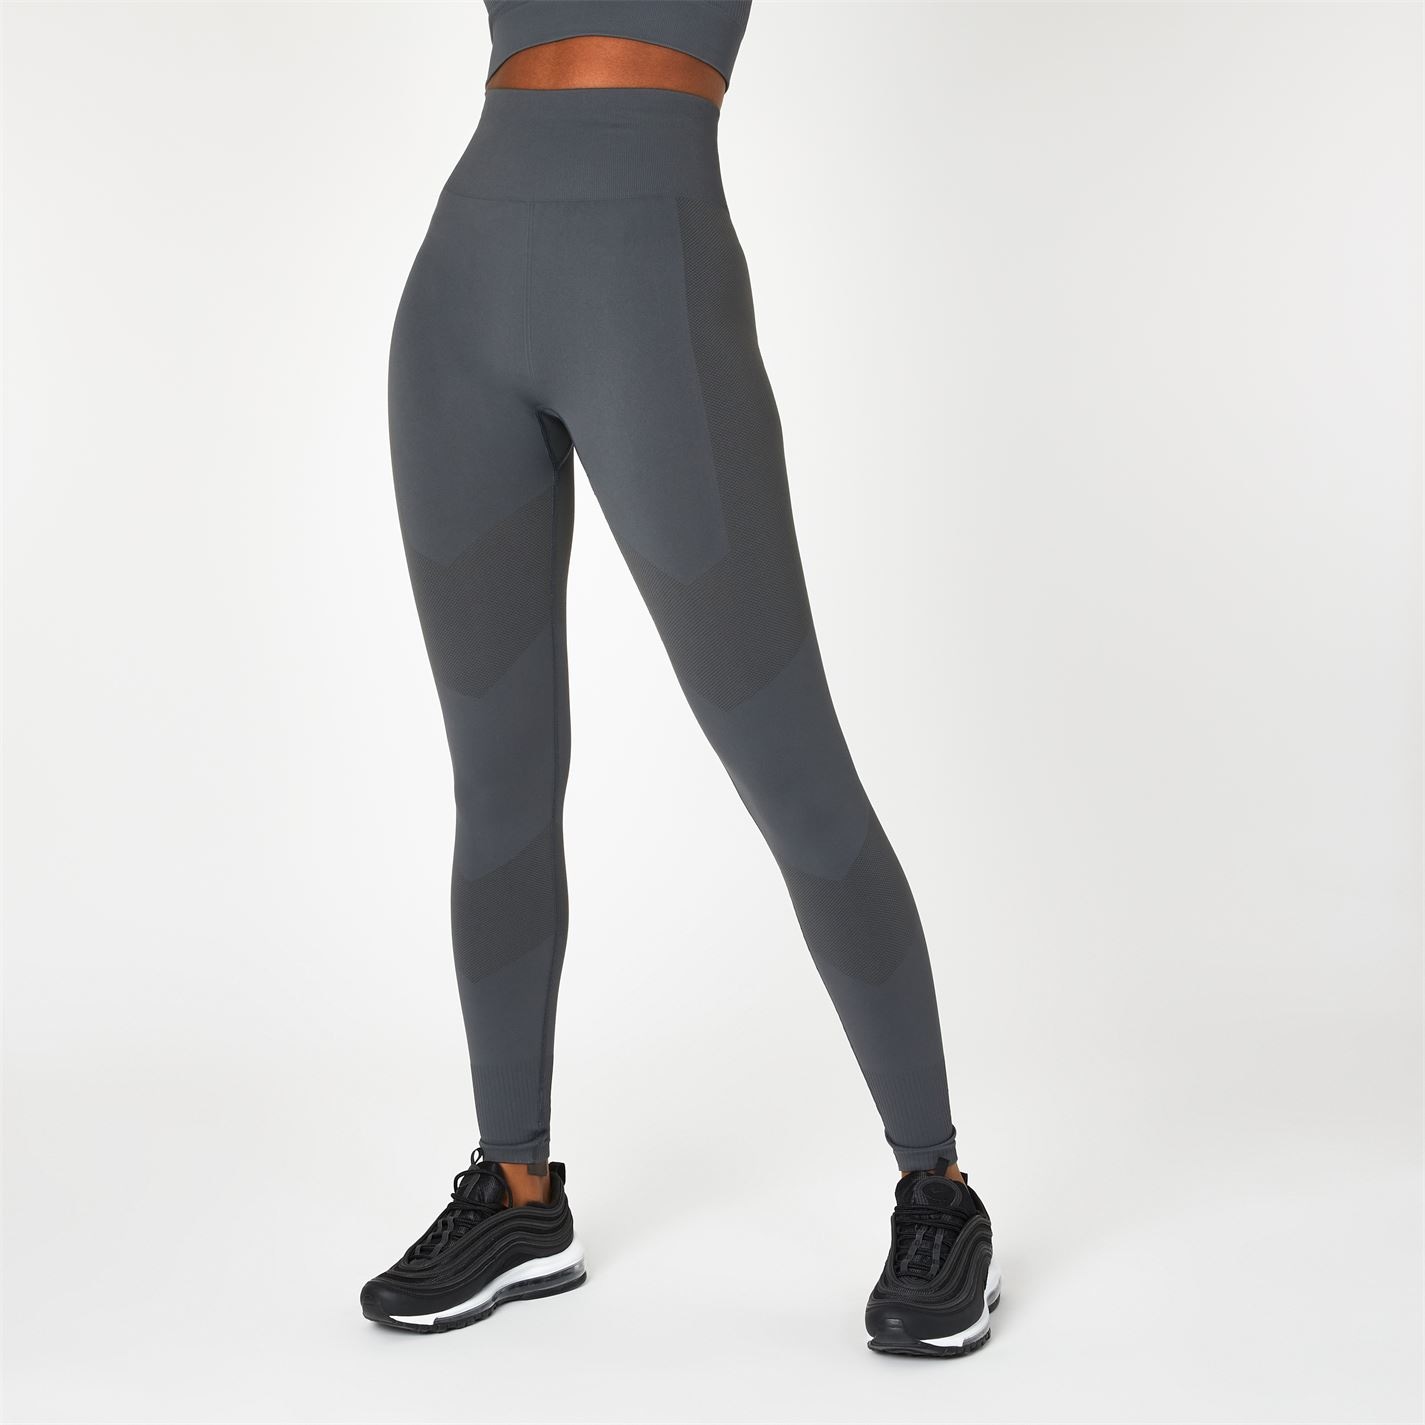 Everlast Sports Black/Pink Sweatpant Jogging Pants Training Size L. | eBay